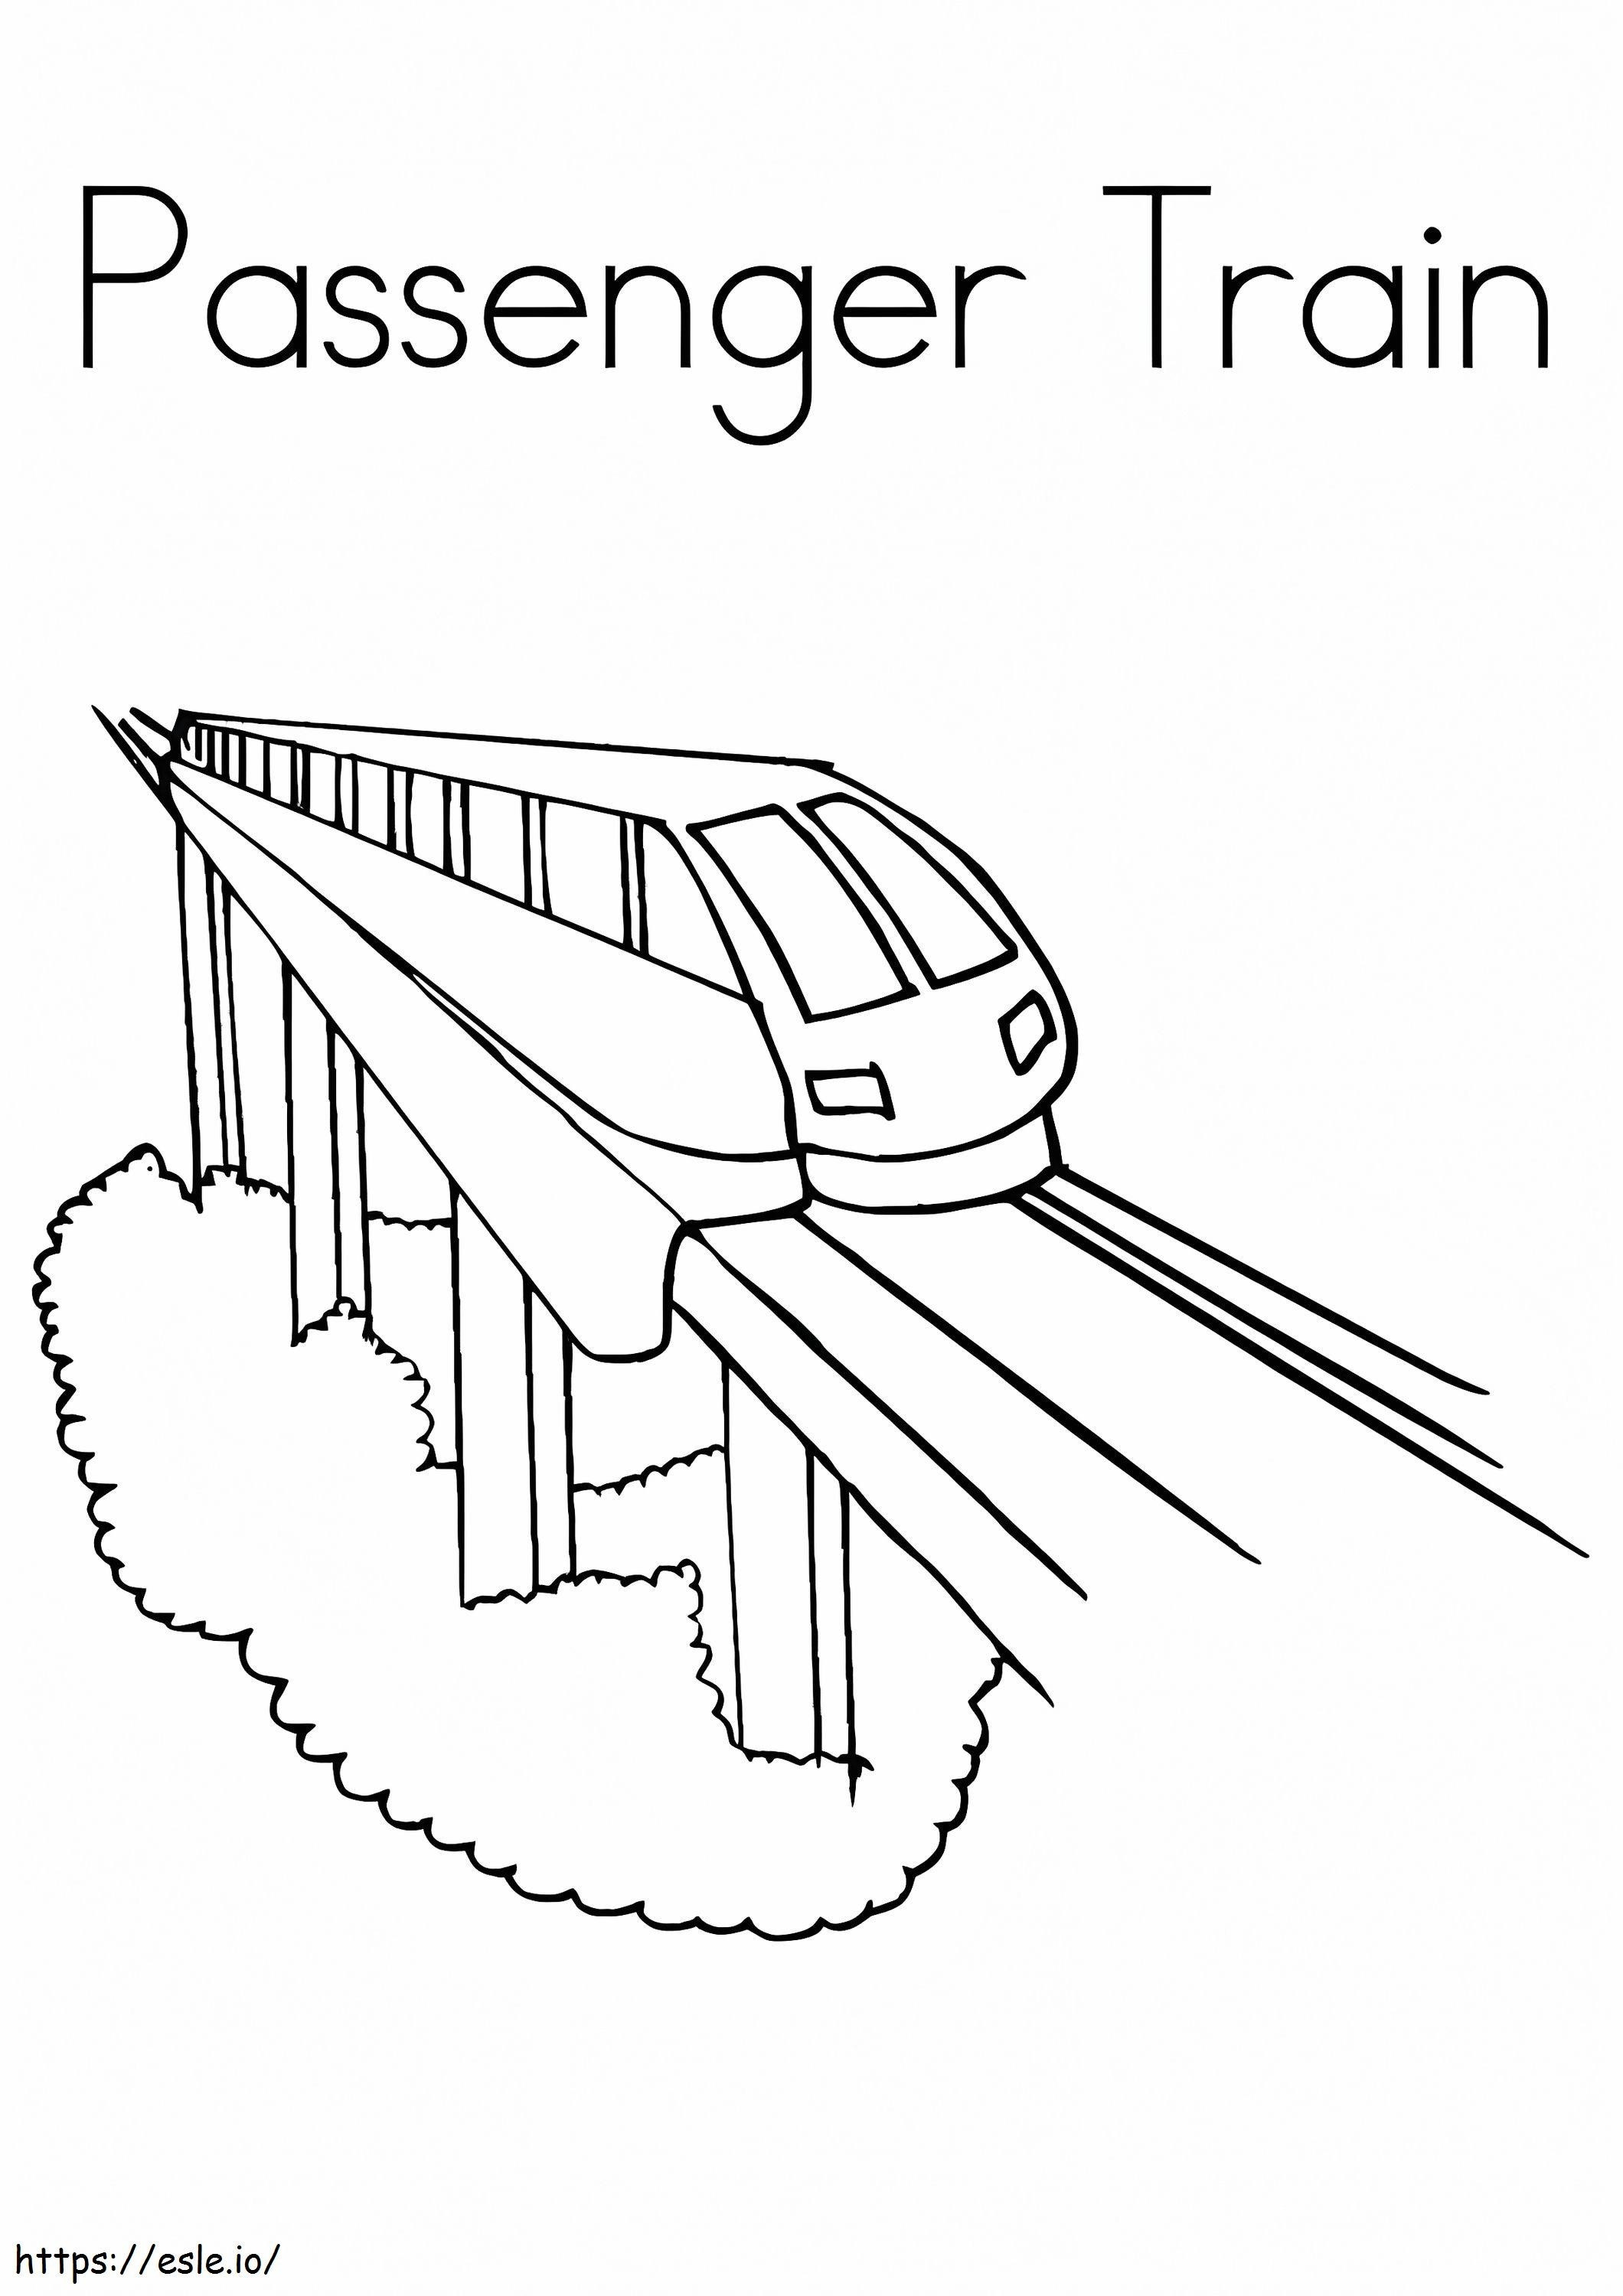 Passenger Train coloring page